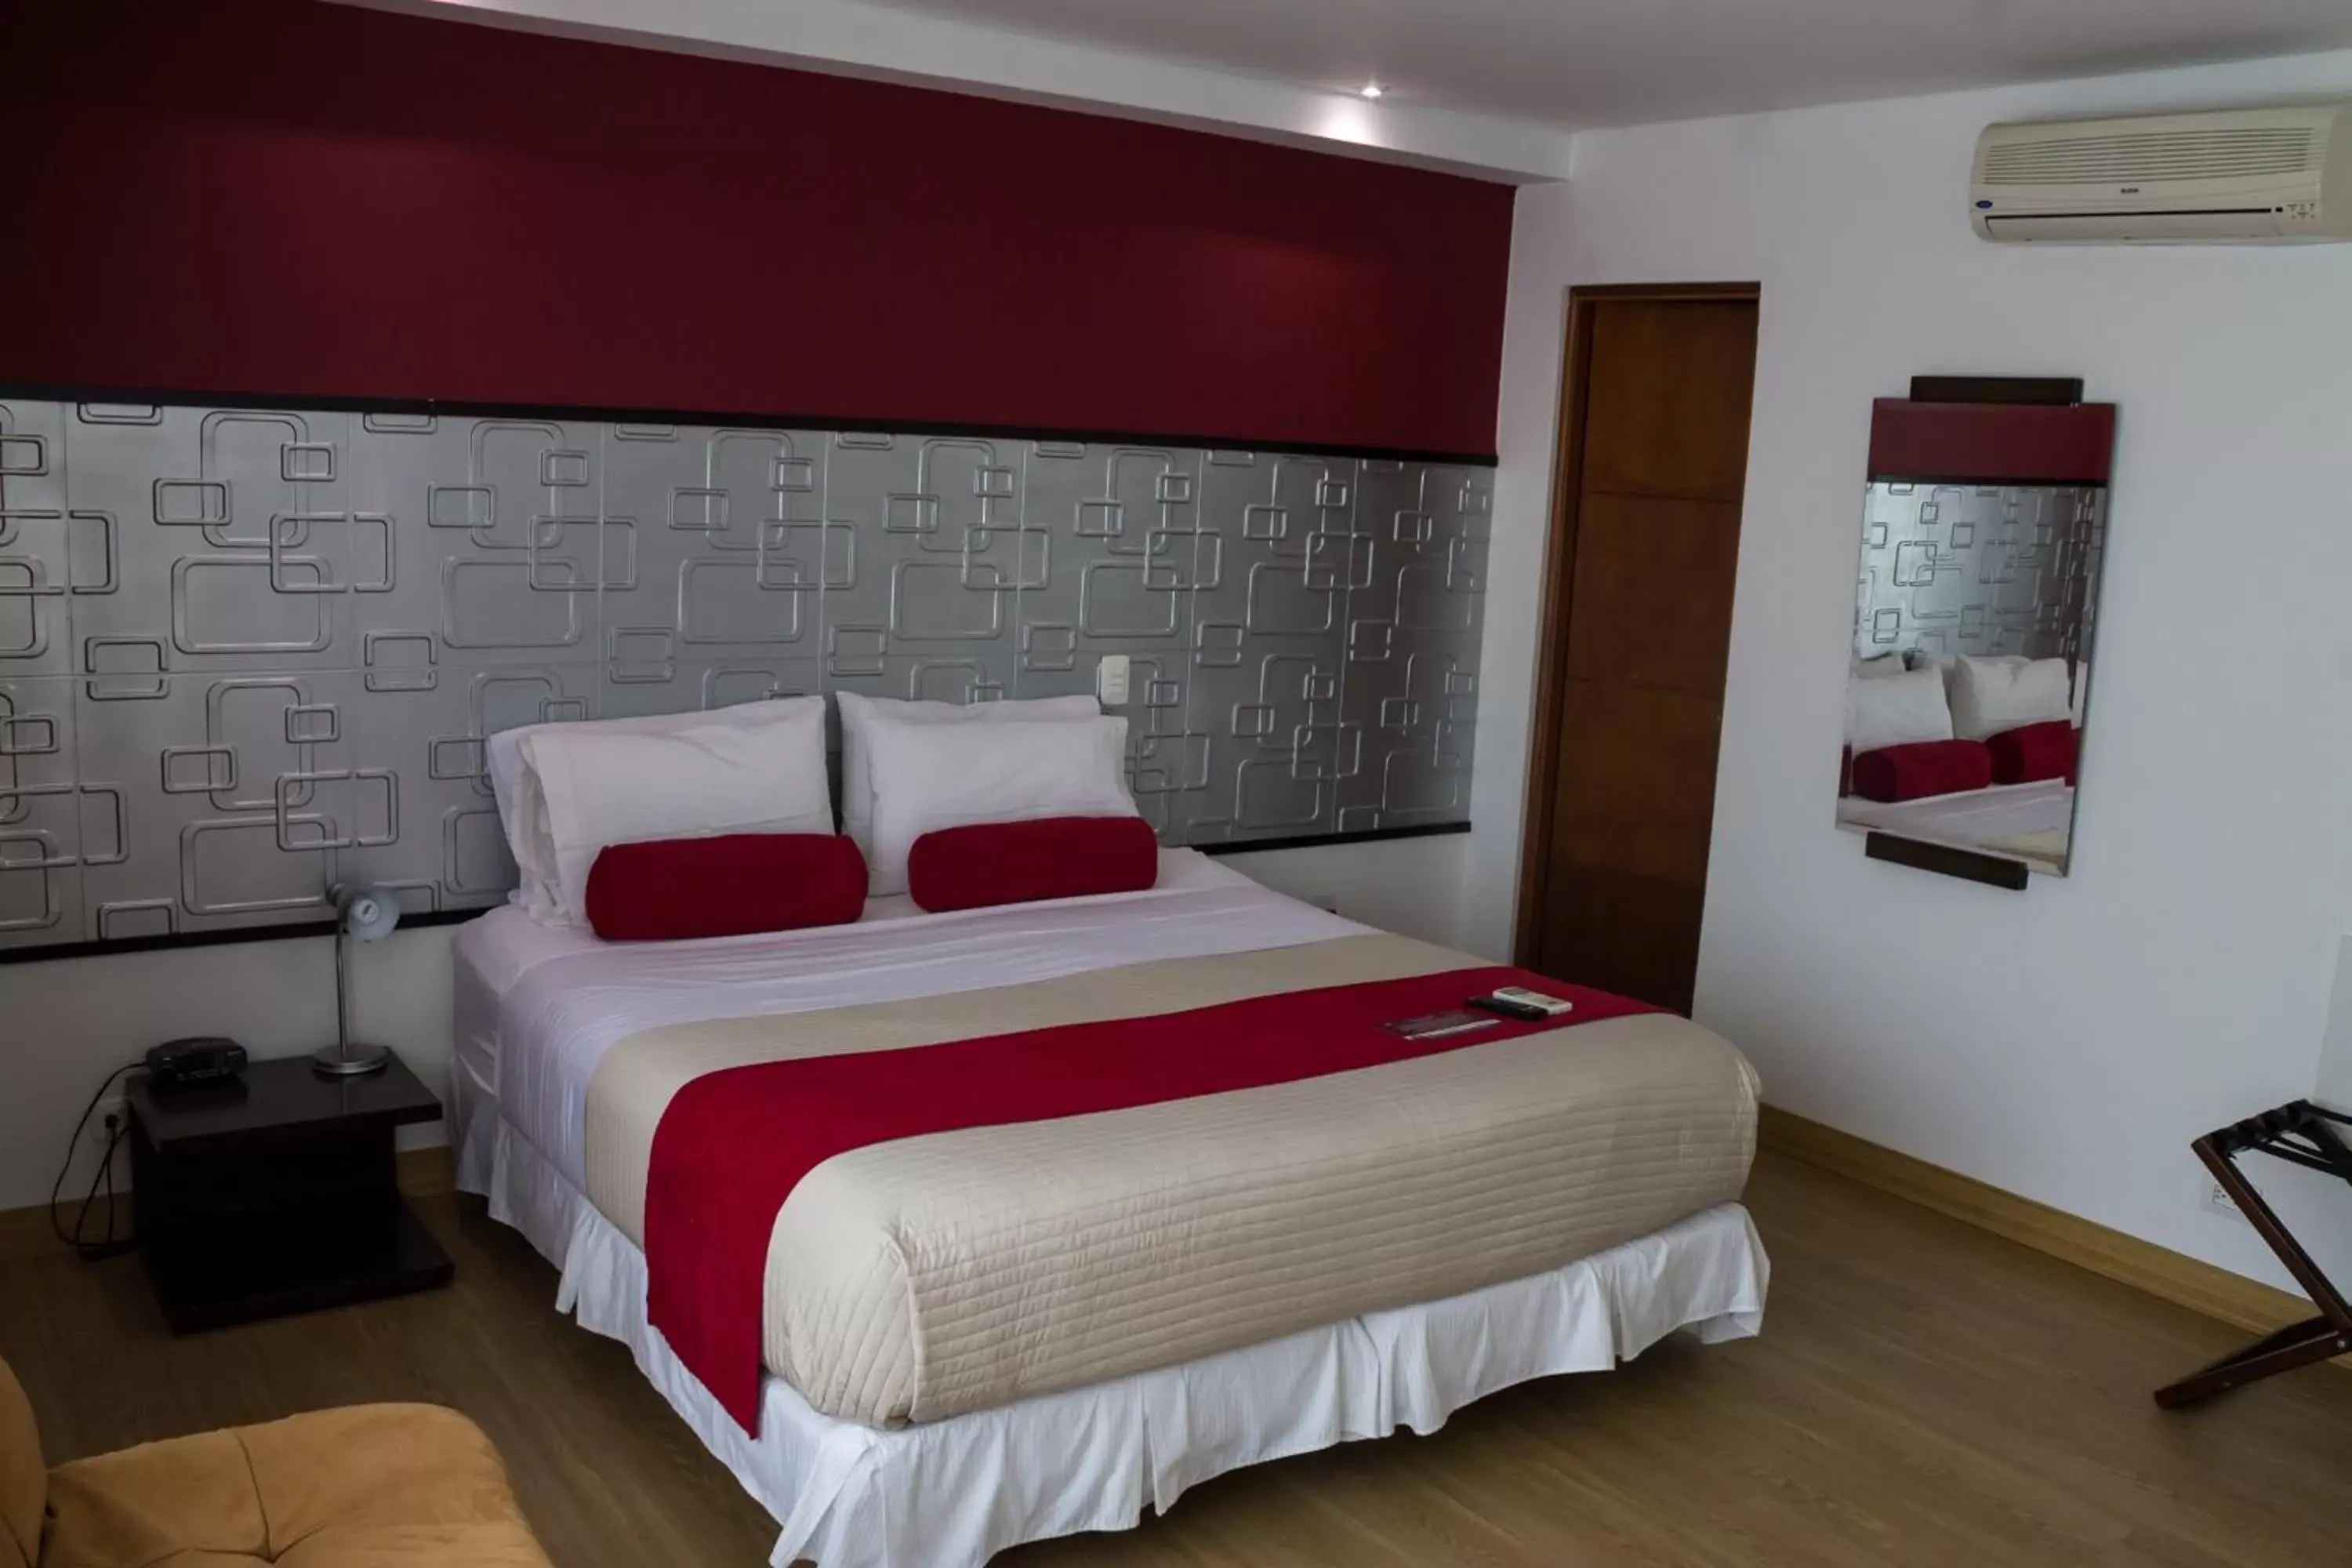 Bedroom, Room Photo in Hotel Florencia Plaza